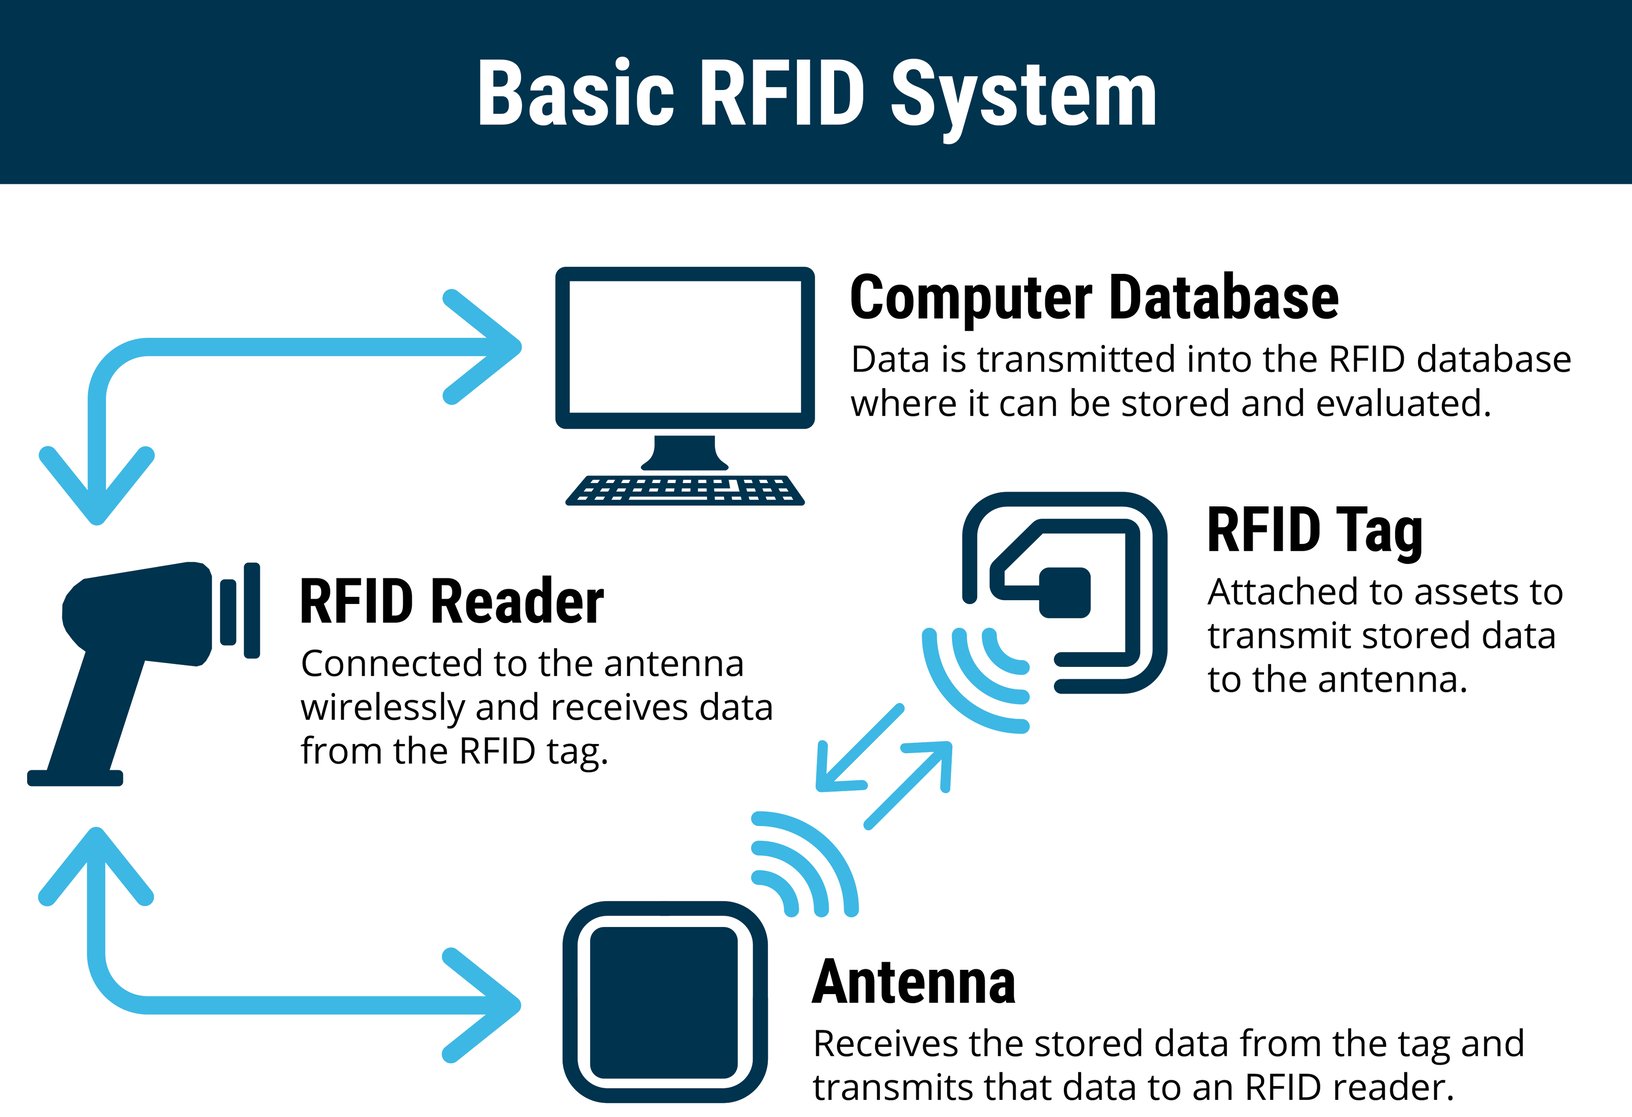 Hệ thống RFID